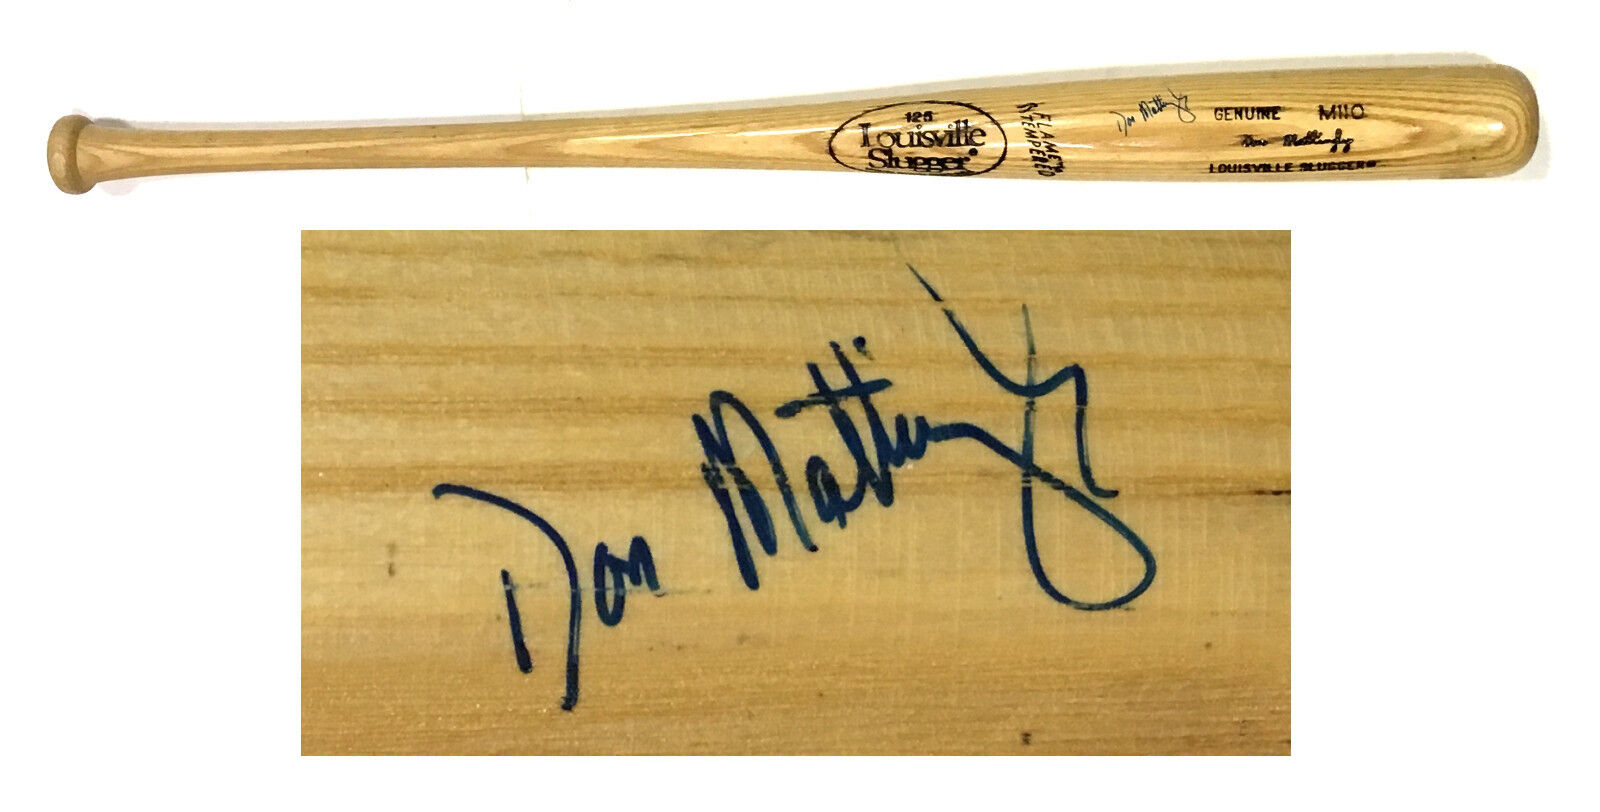 Don Mattingly Signed 1987 game issued LS M110 baseball bat autograph PSA/DNA COA